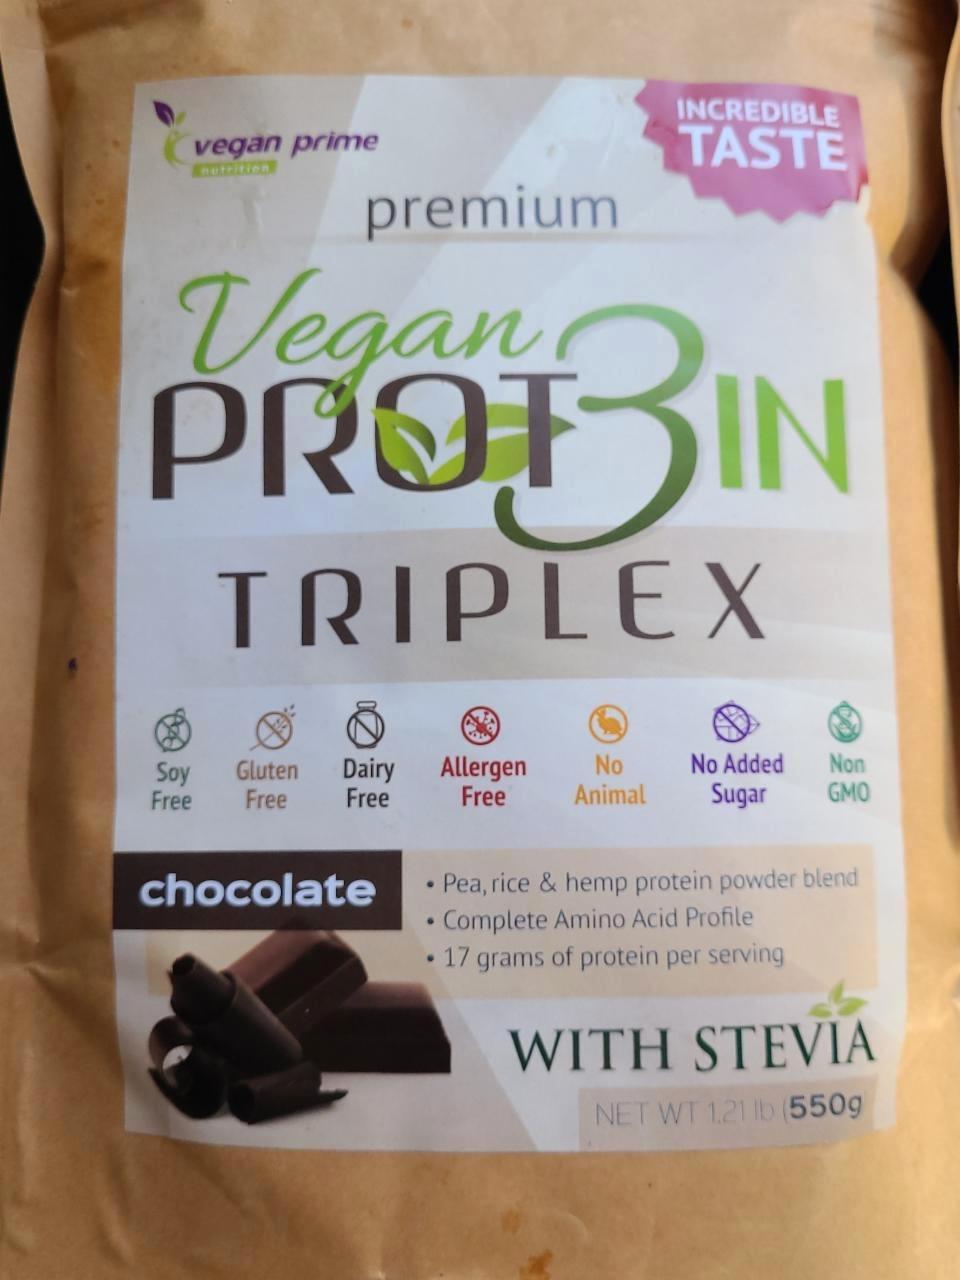 Képek - Vegan prot3in1 triplex Csokoládé Vegan Prime